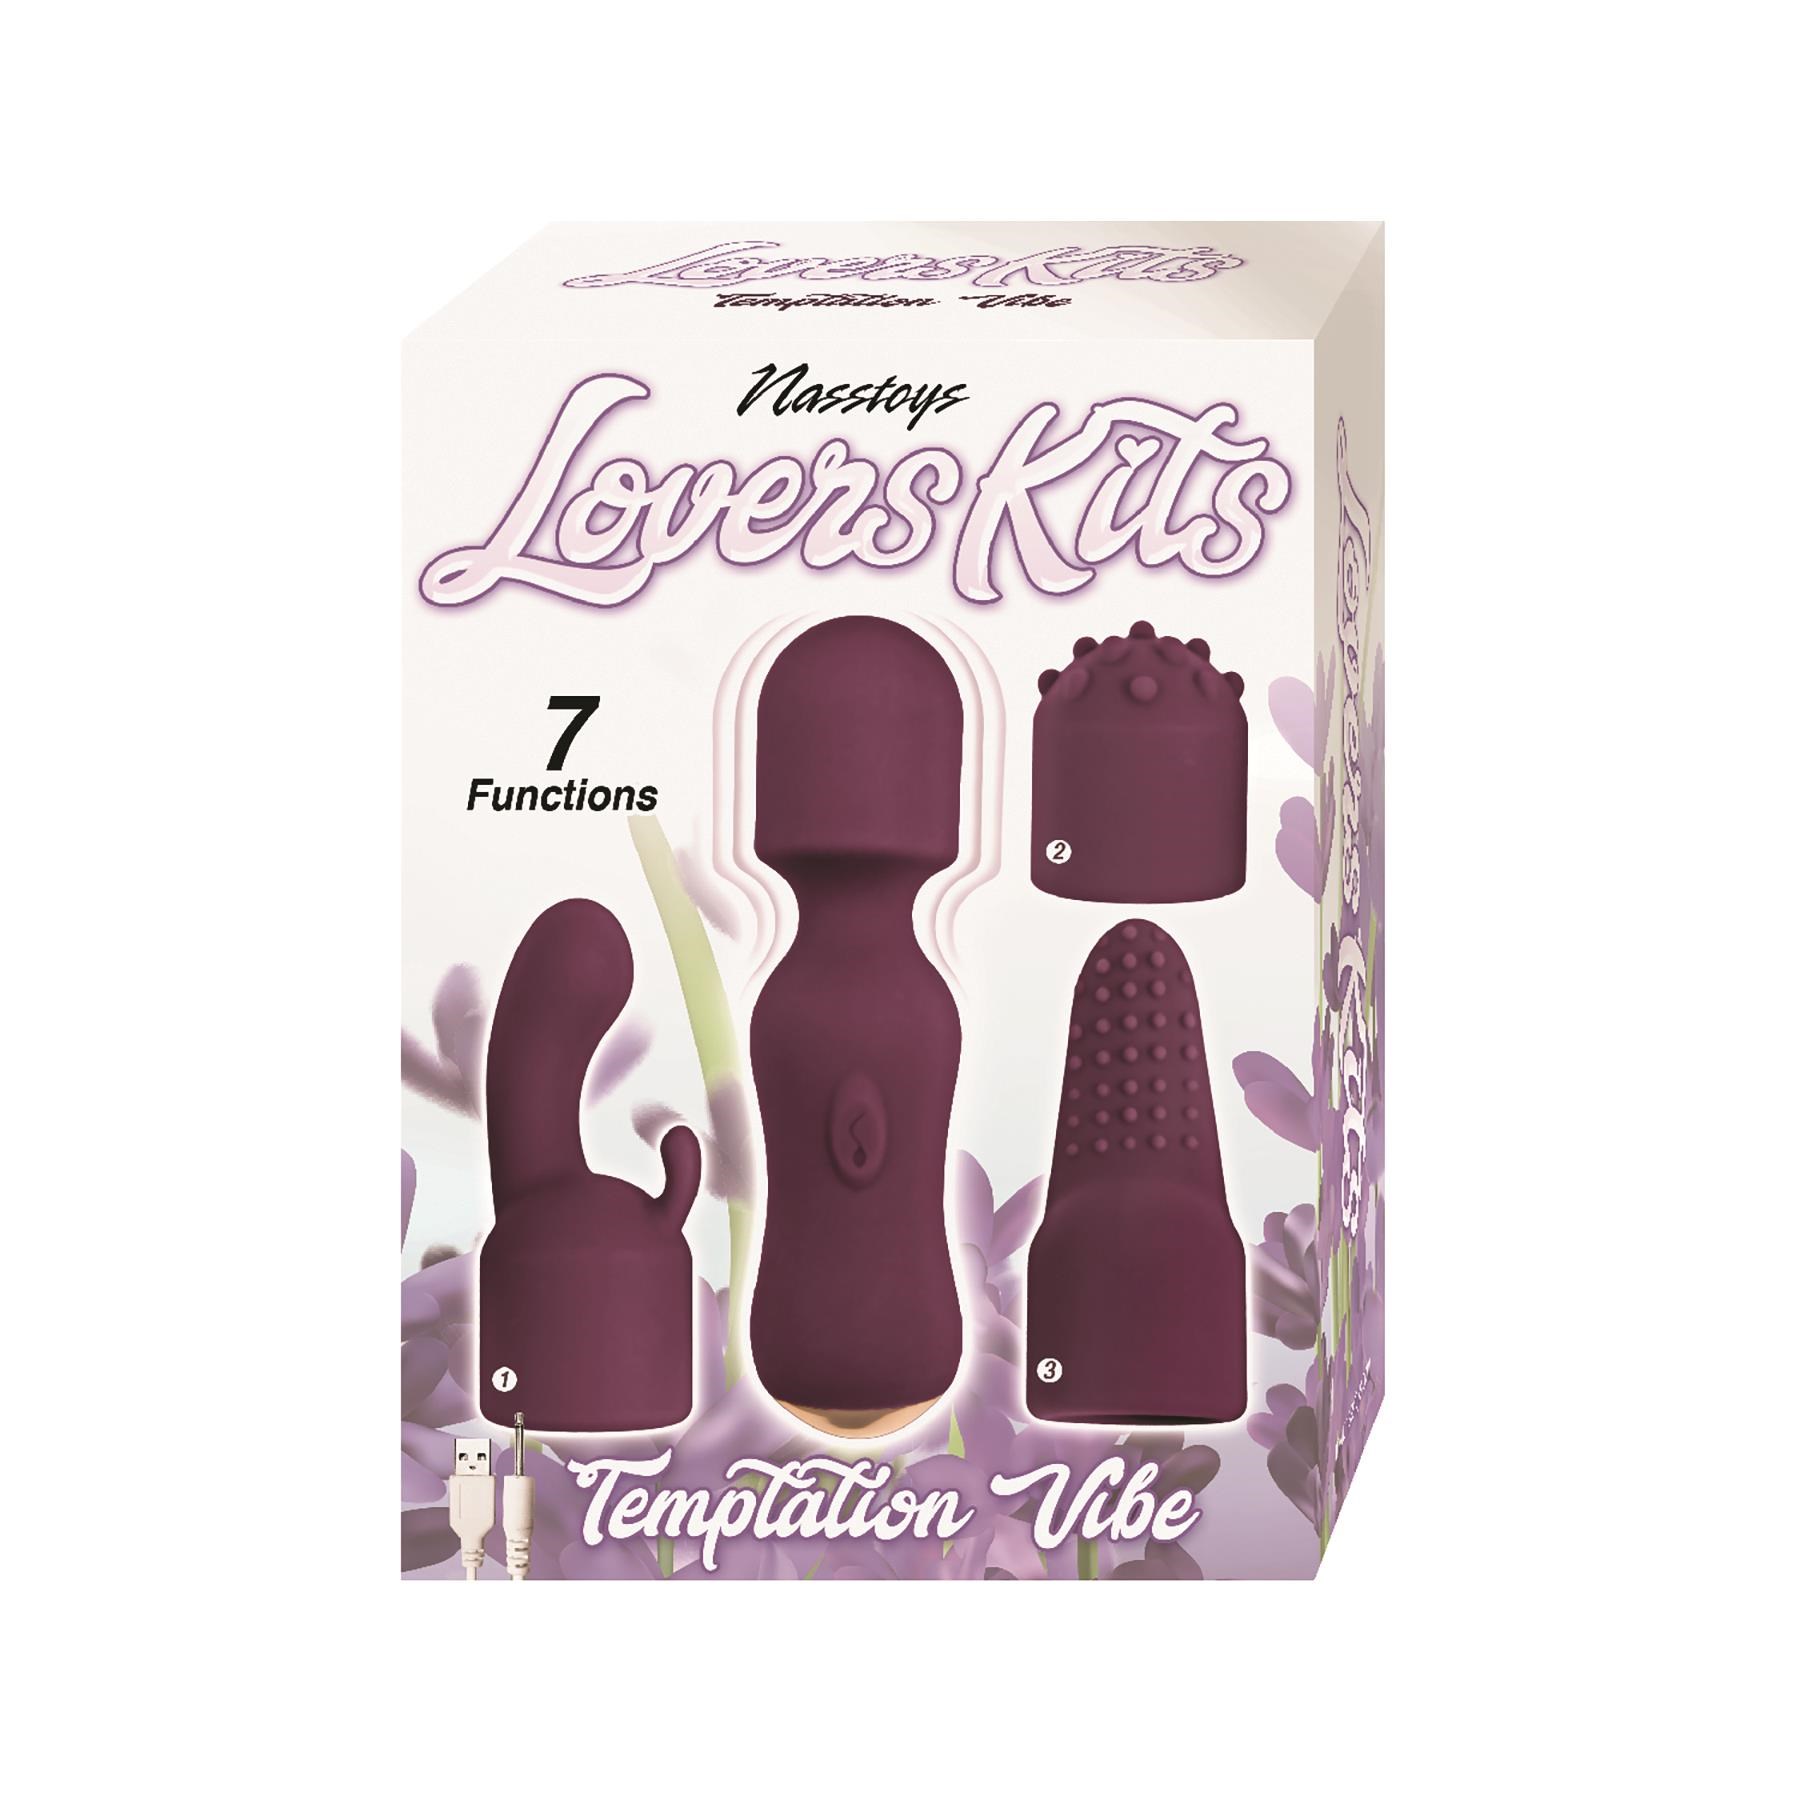 Lover's Kits Temptation Vibrator Kit - Packaging